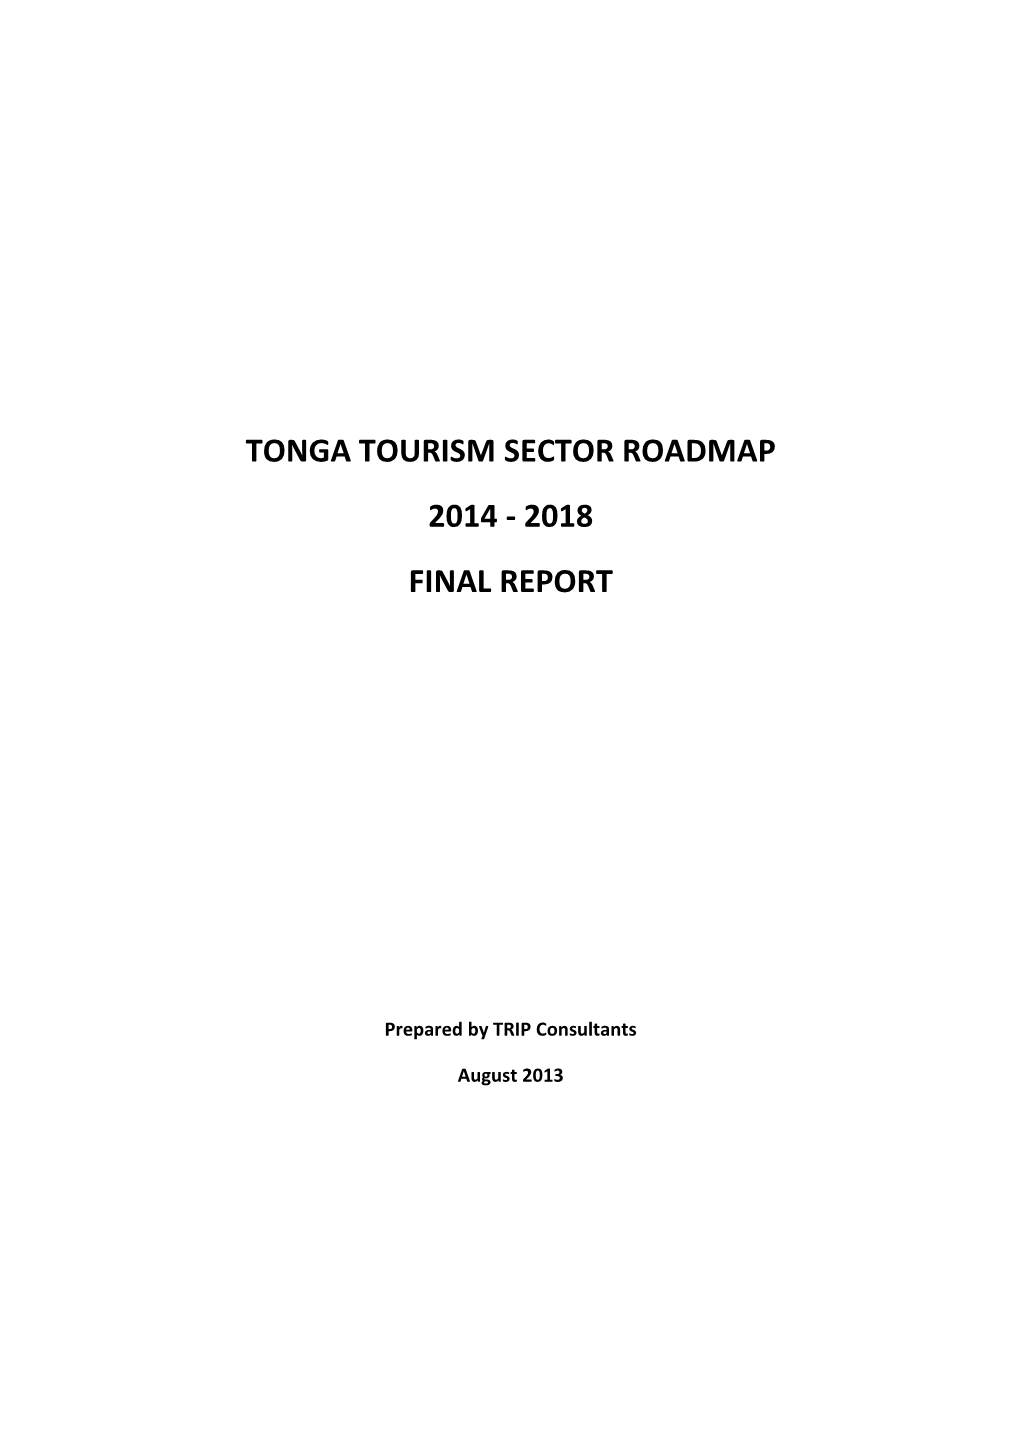 Tonga Tourism Sector Roadmap 2014 - 2018 Final Report